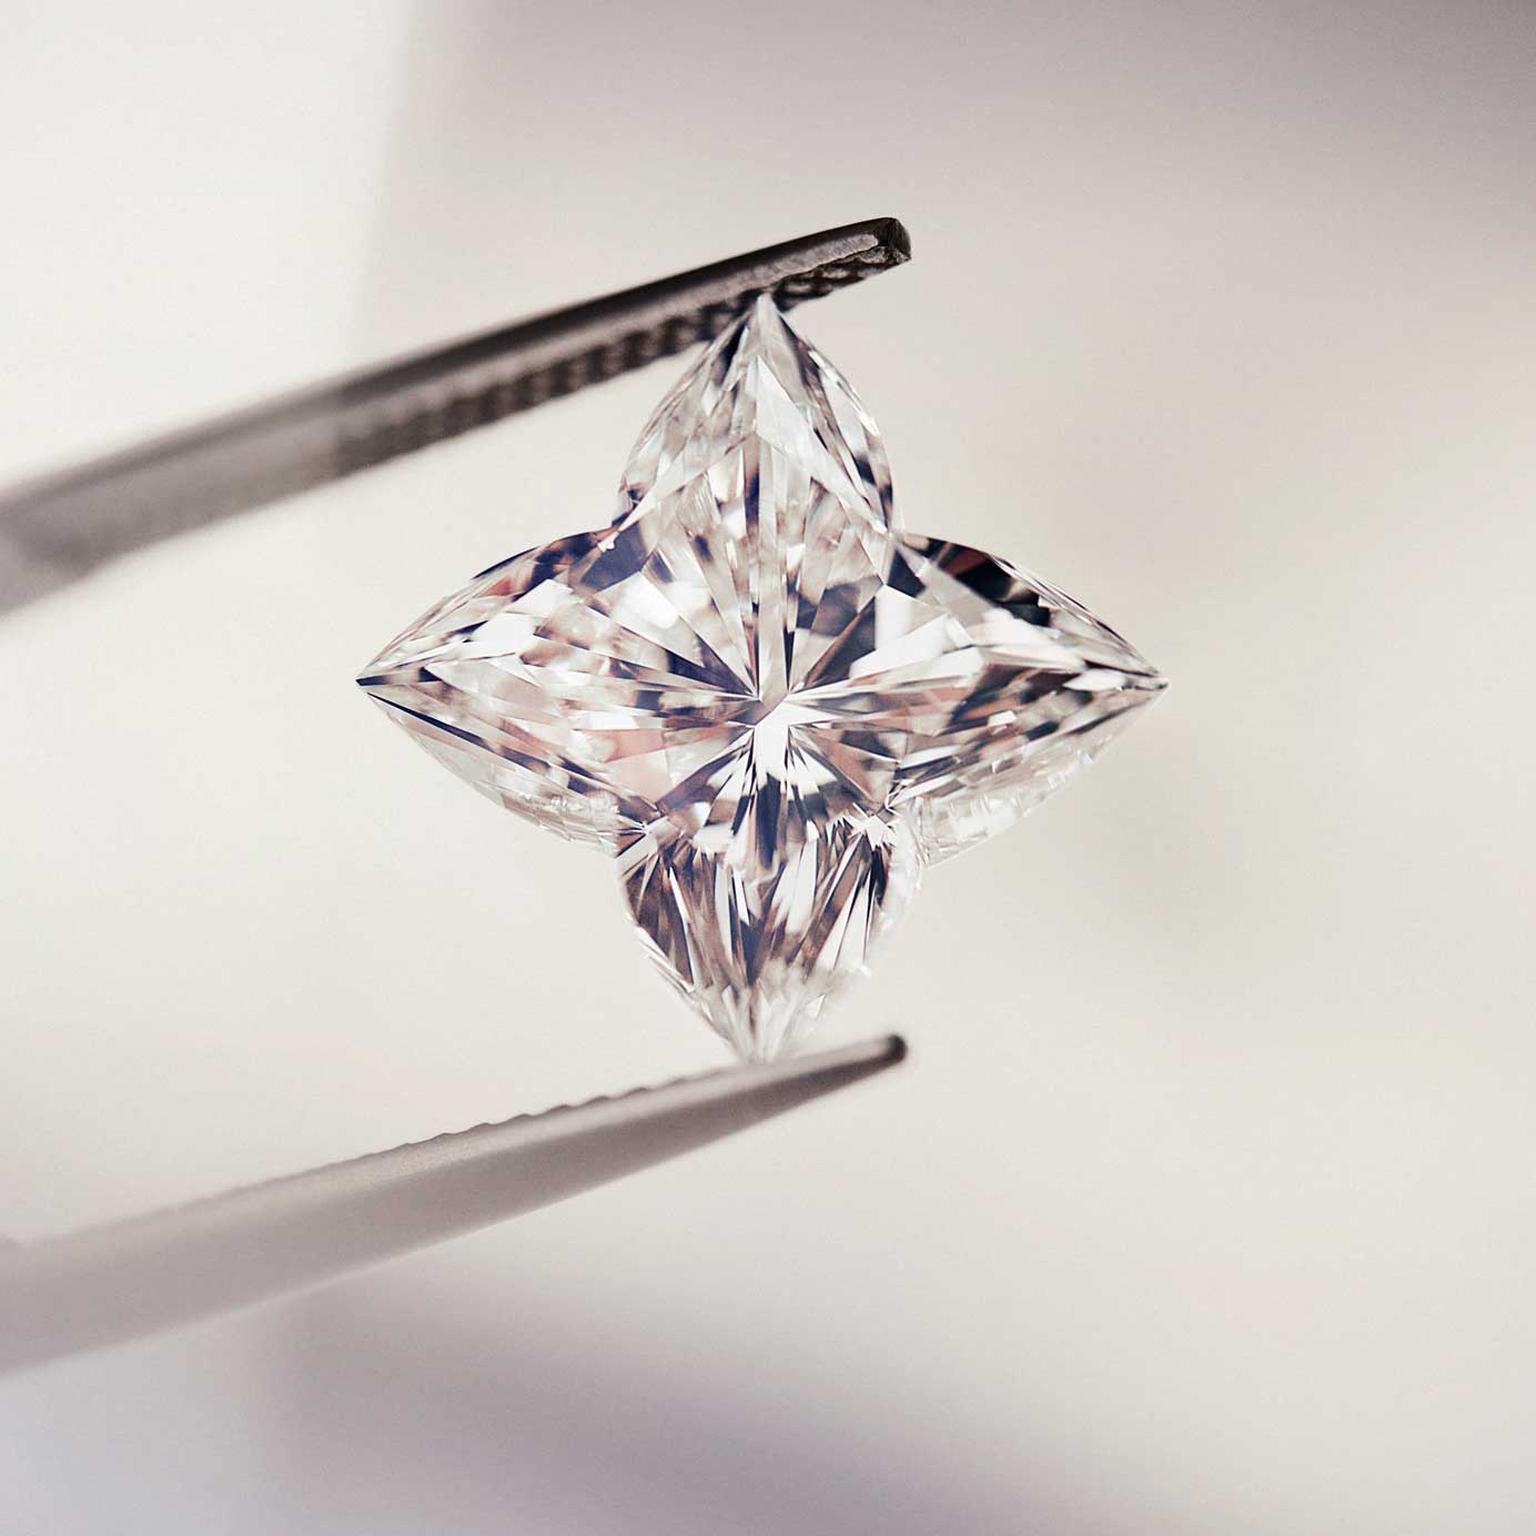 Louis Vuitton Monogram Star diamond close up of the cut